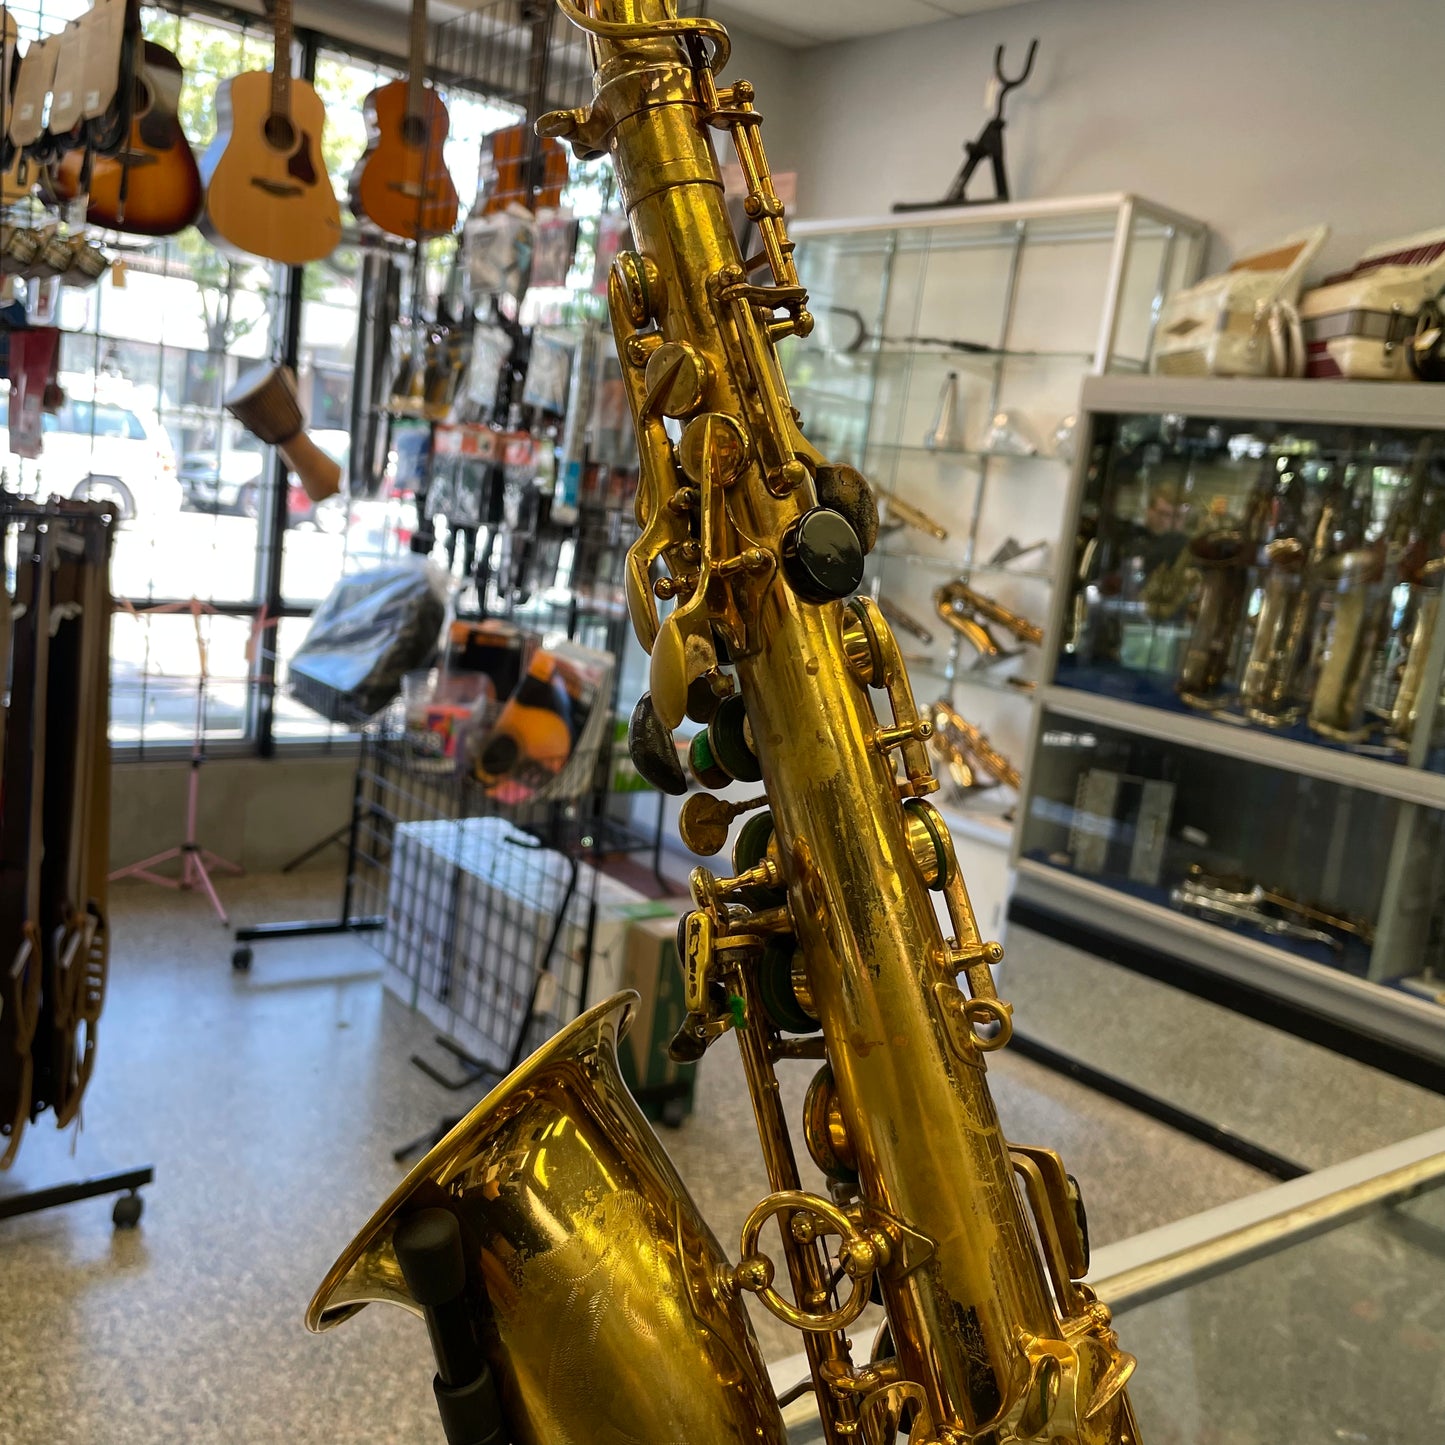 Selmer Alto Saxophone - Mikes Music Shop